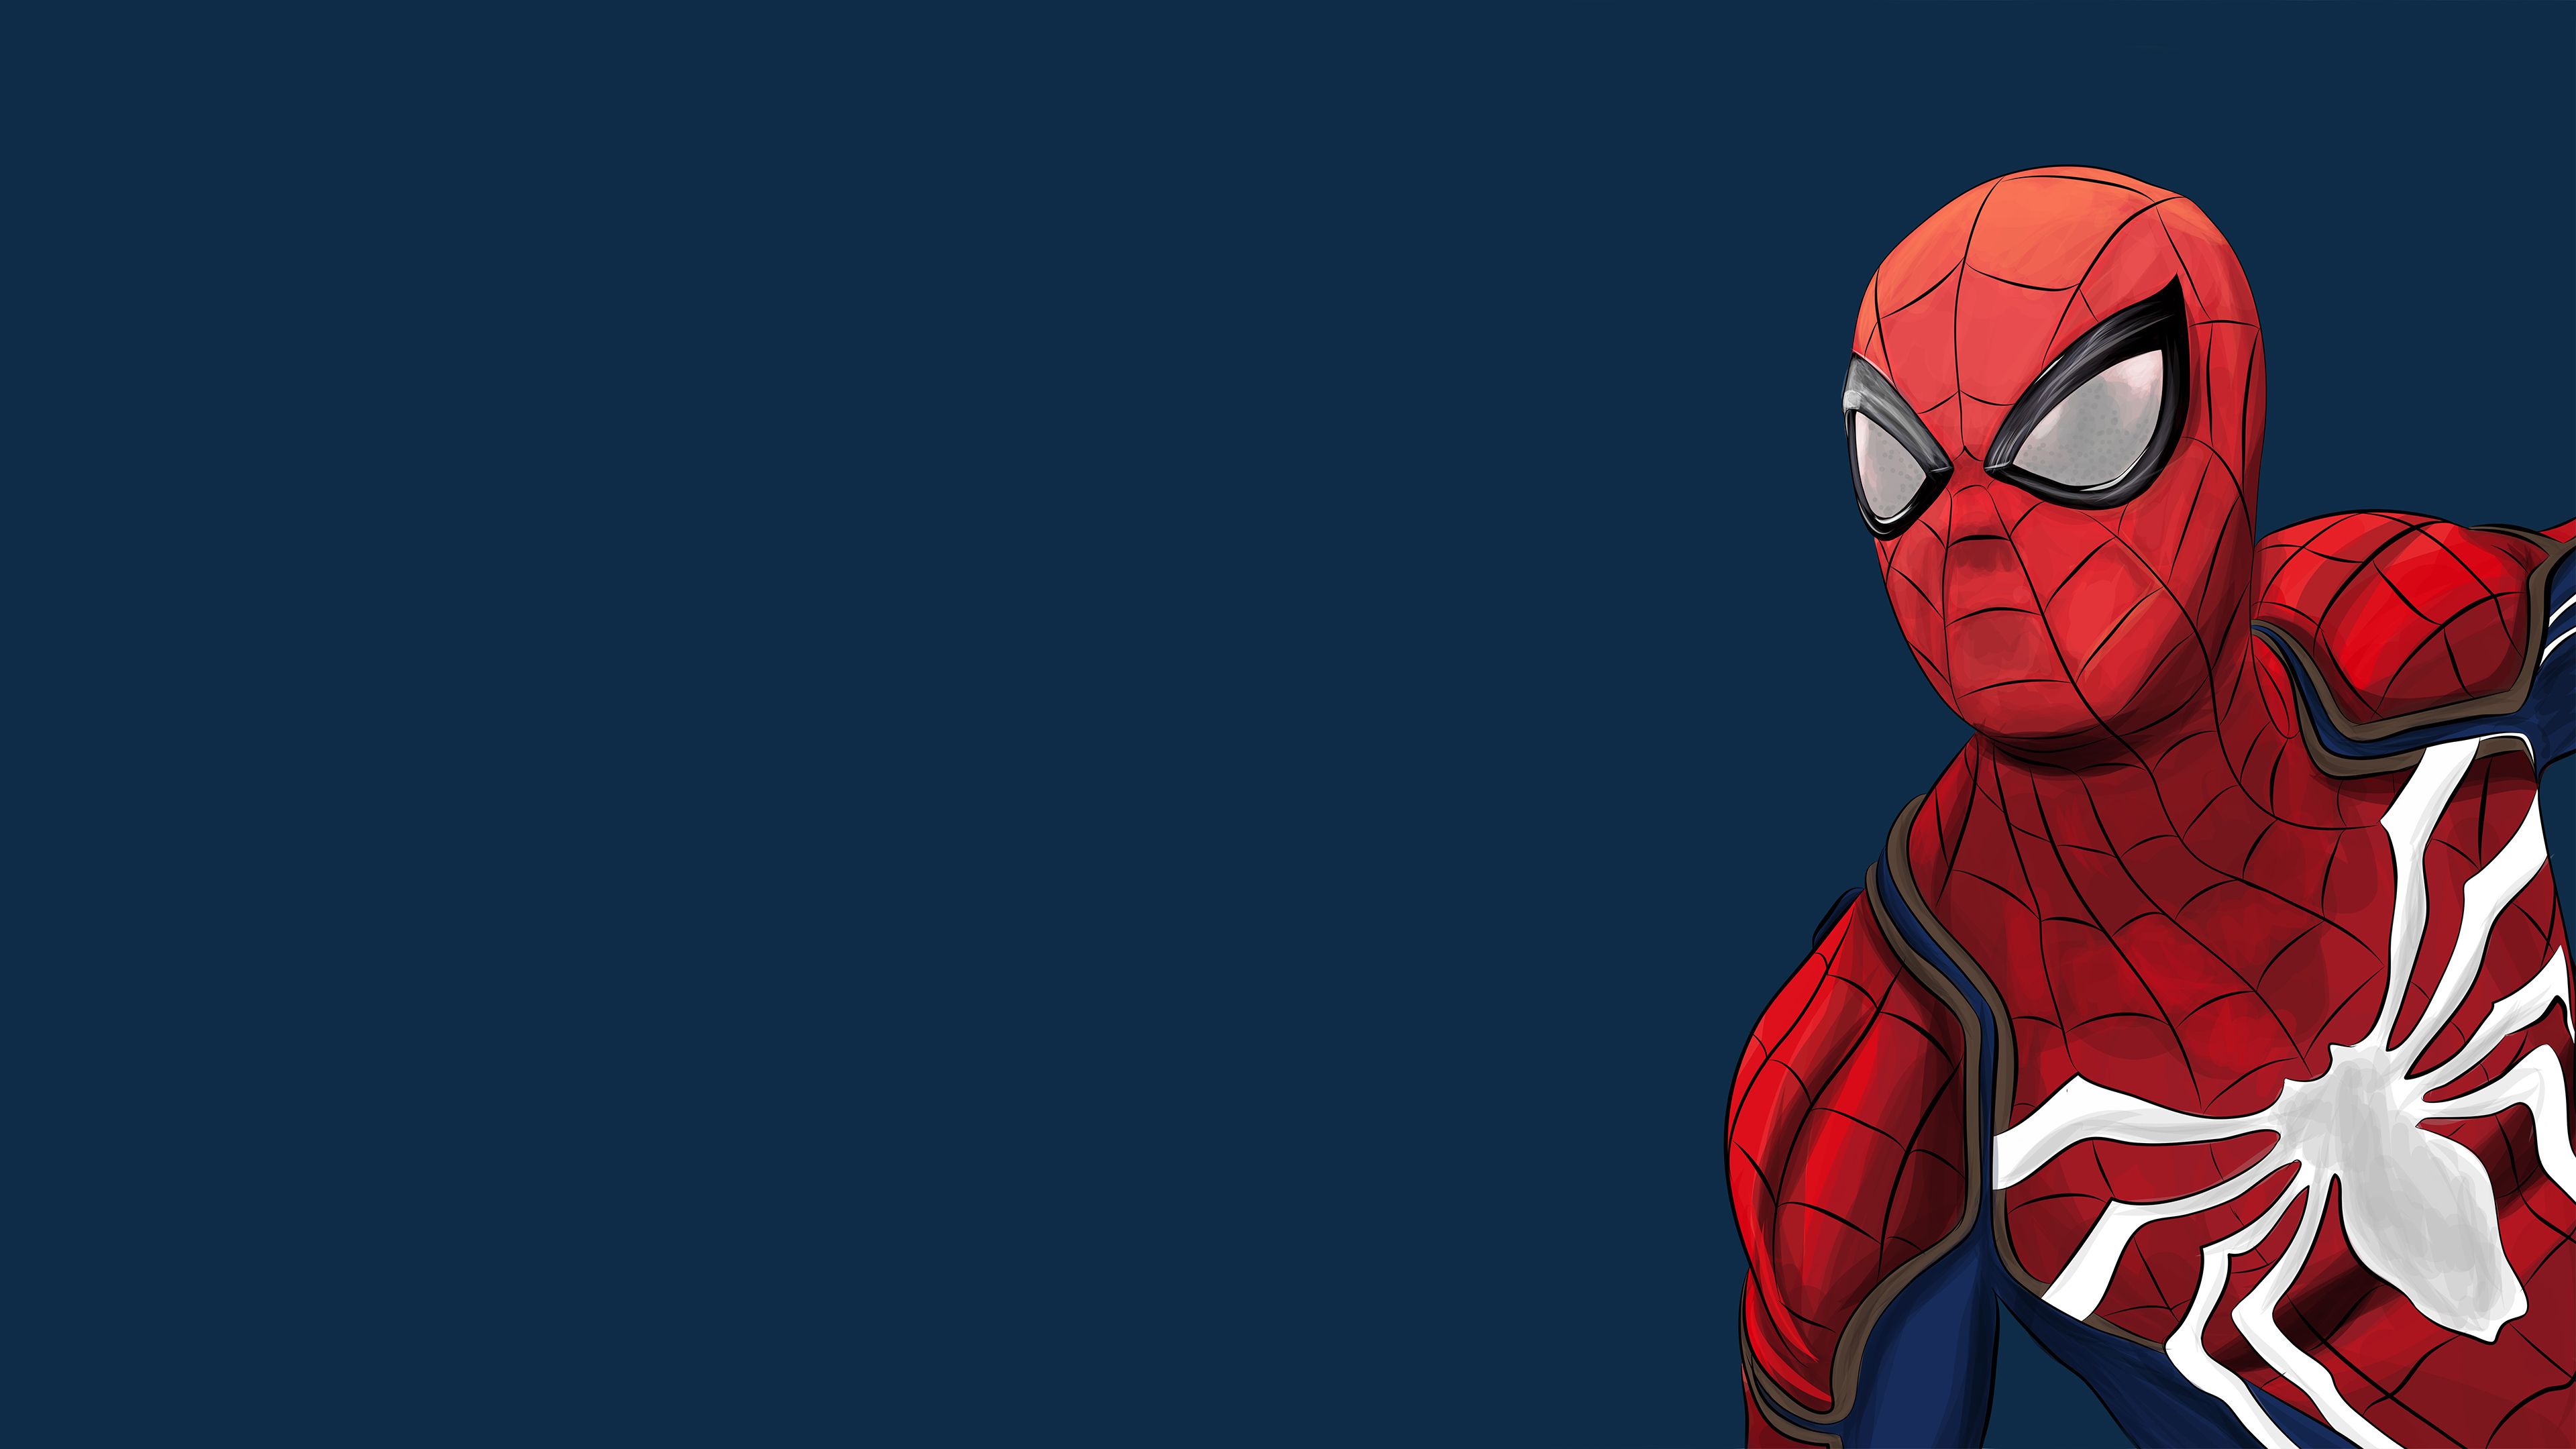 ps4 wallpaper,spider man,superhero,fictional character,hero